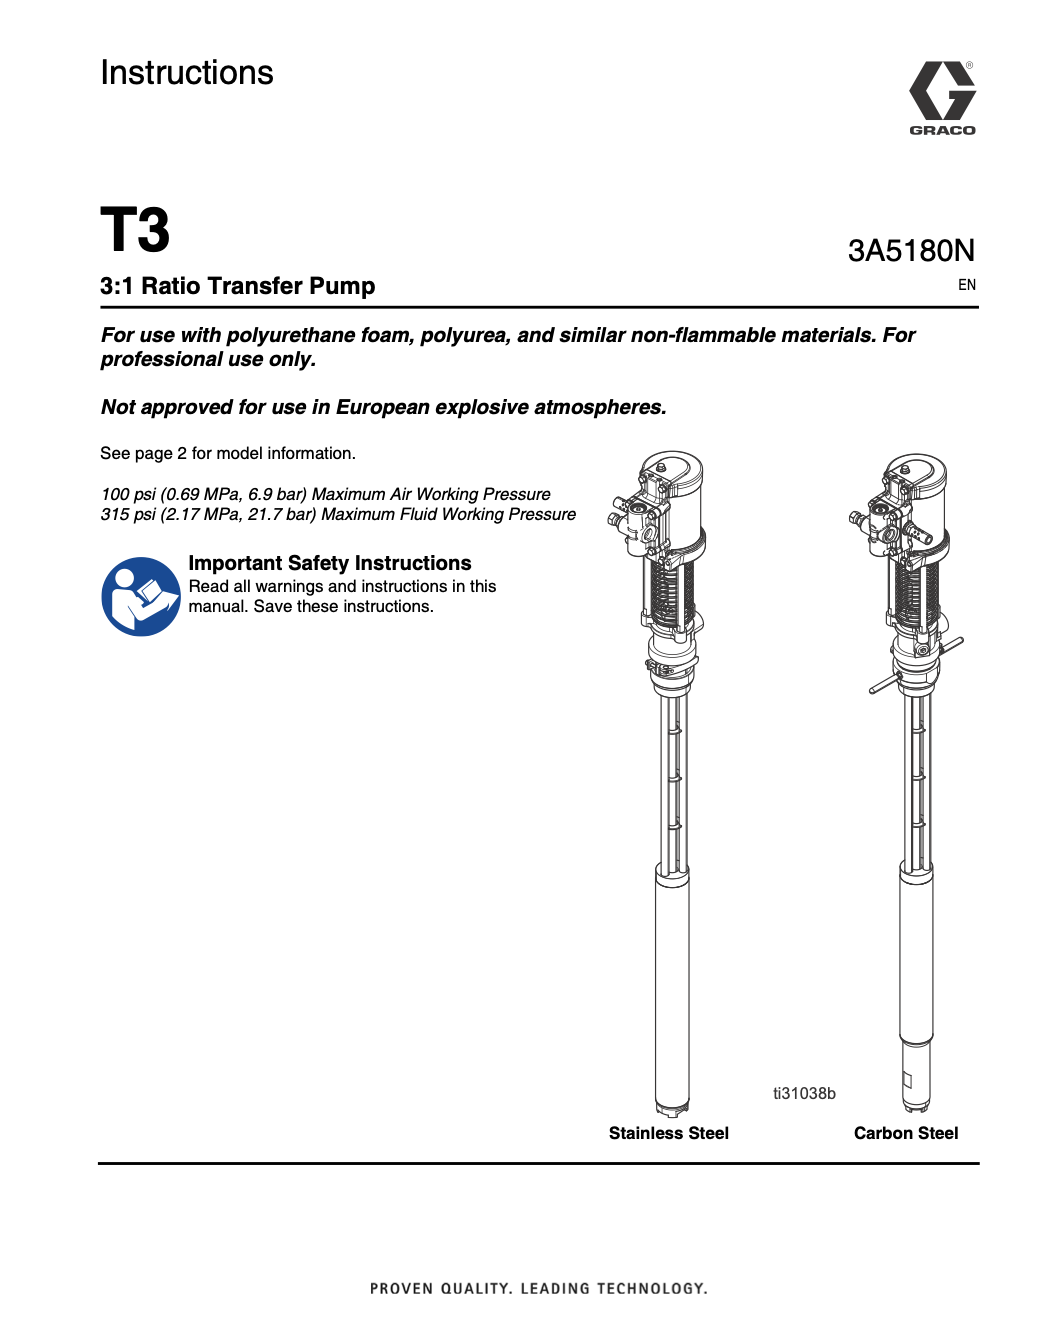 Graco T3 Transfer Pump Instruction Manual